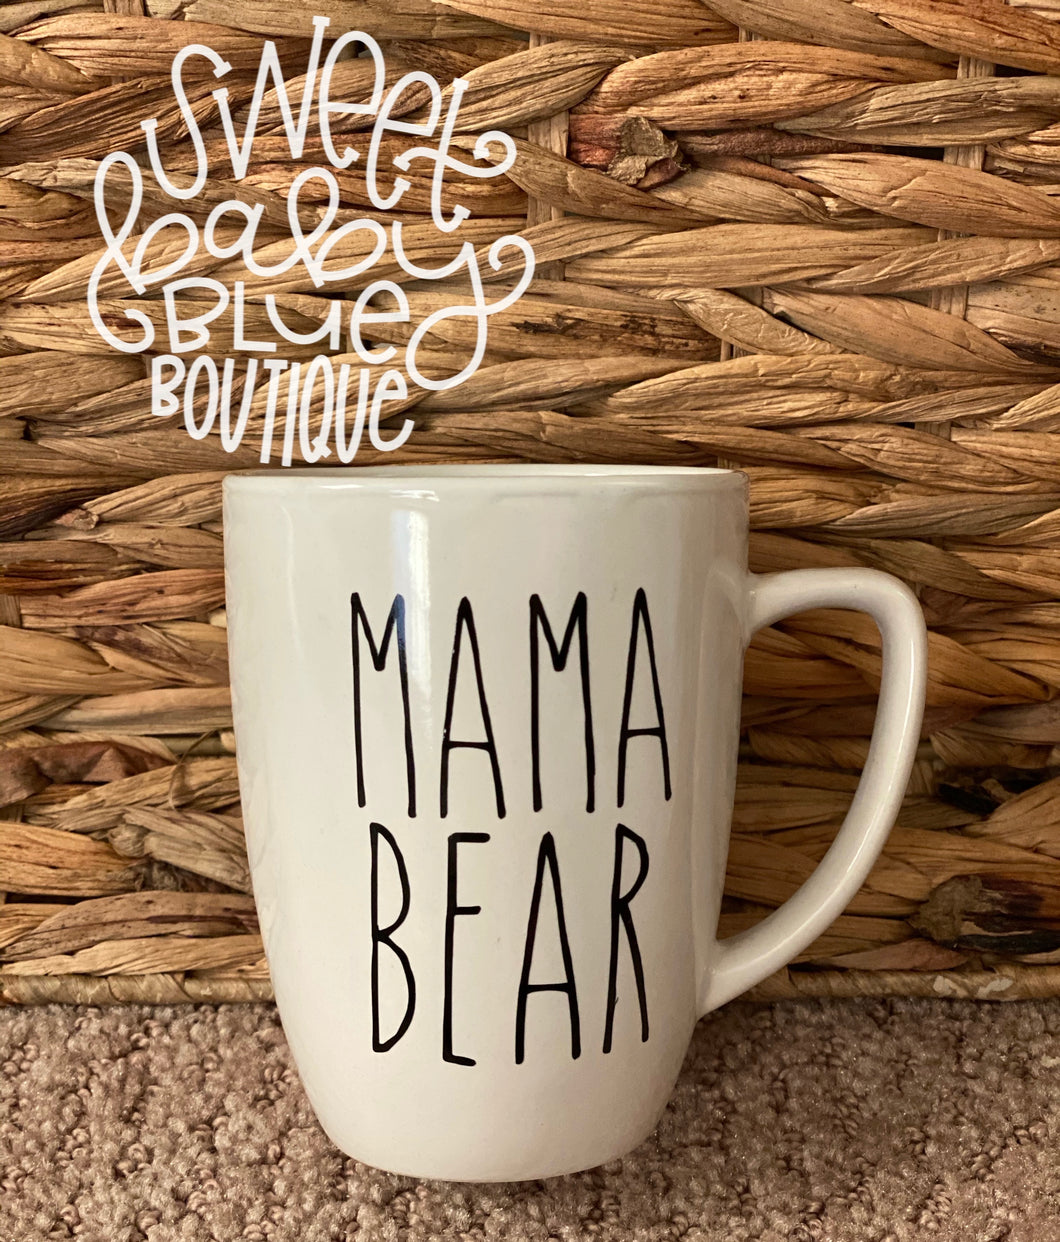 Mama Bear coffee mug